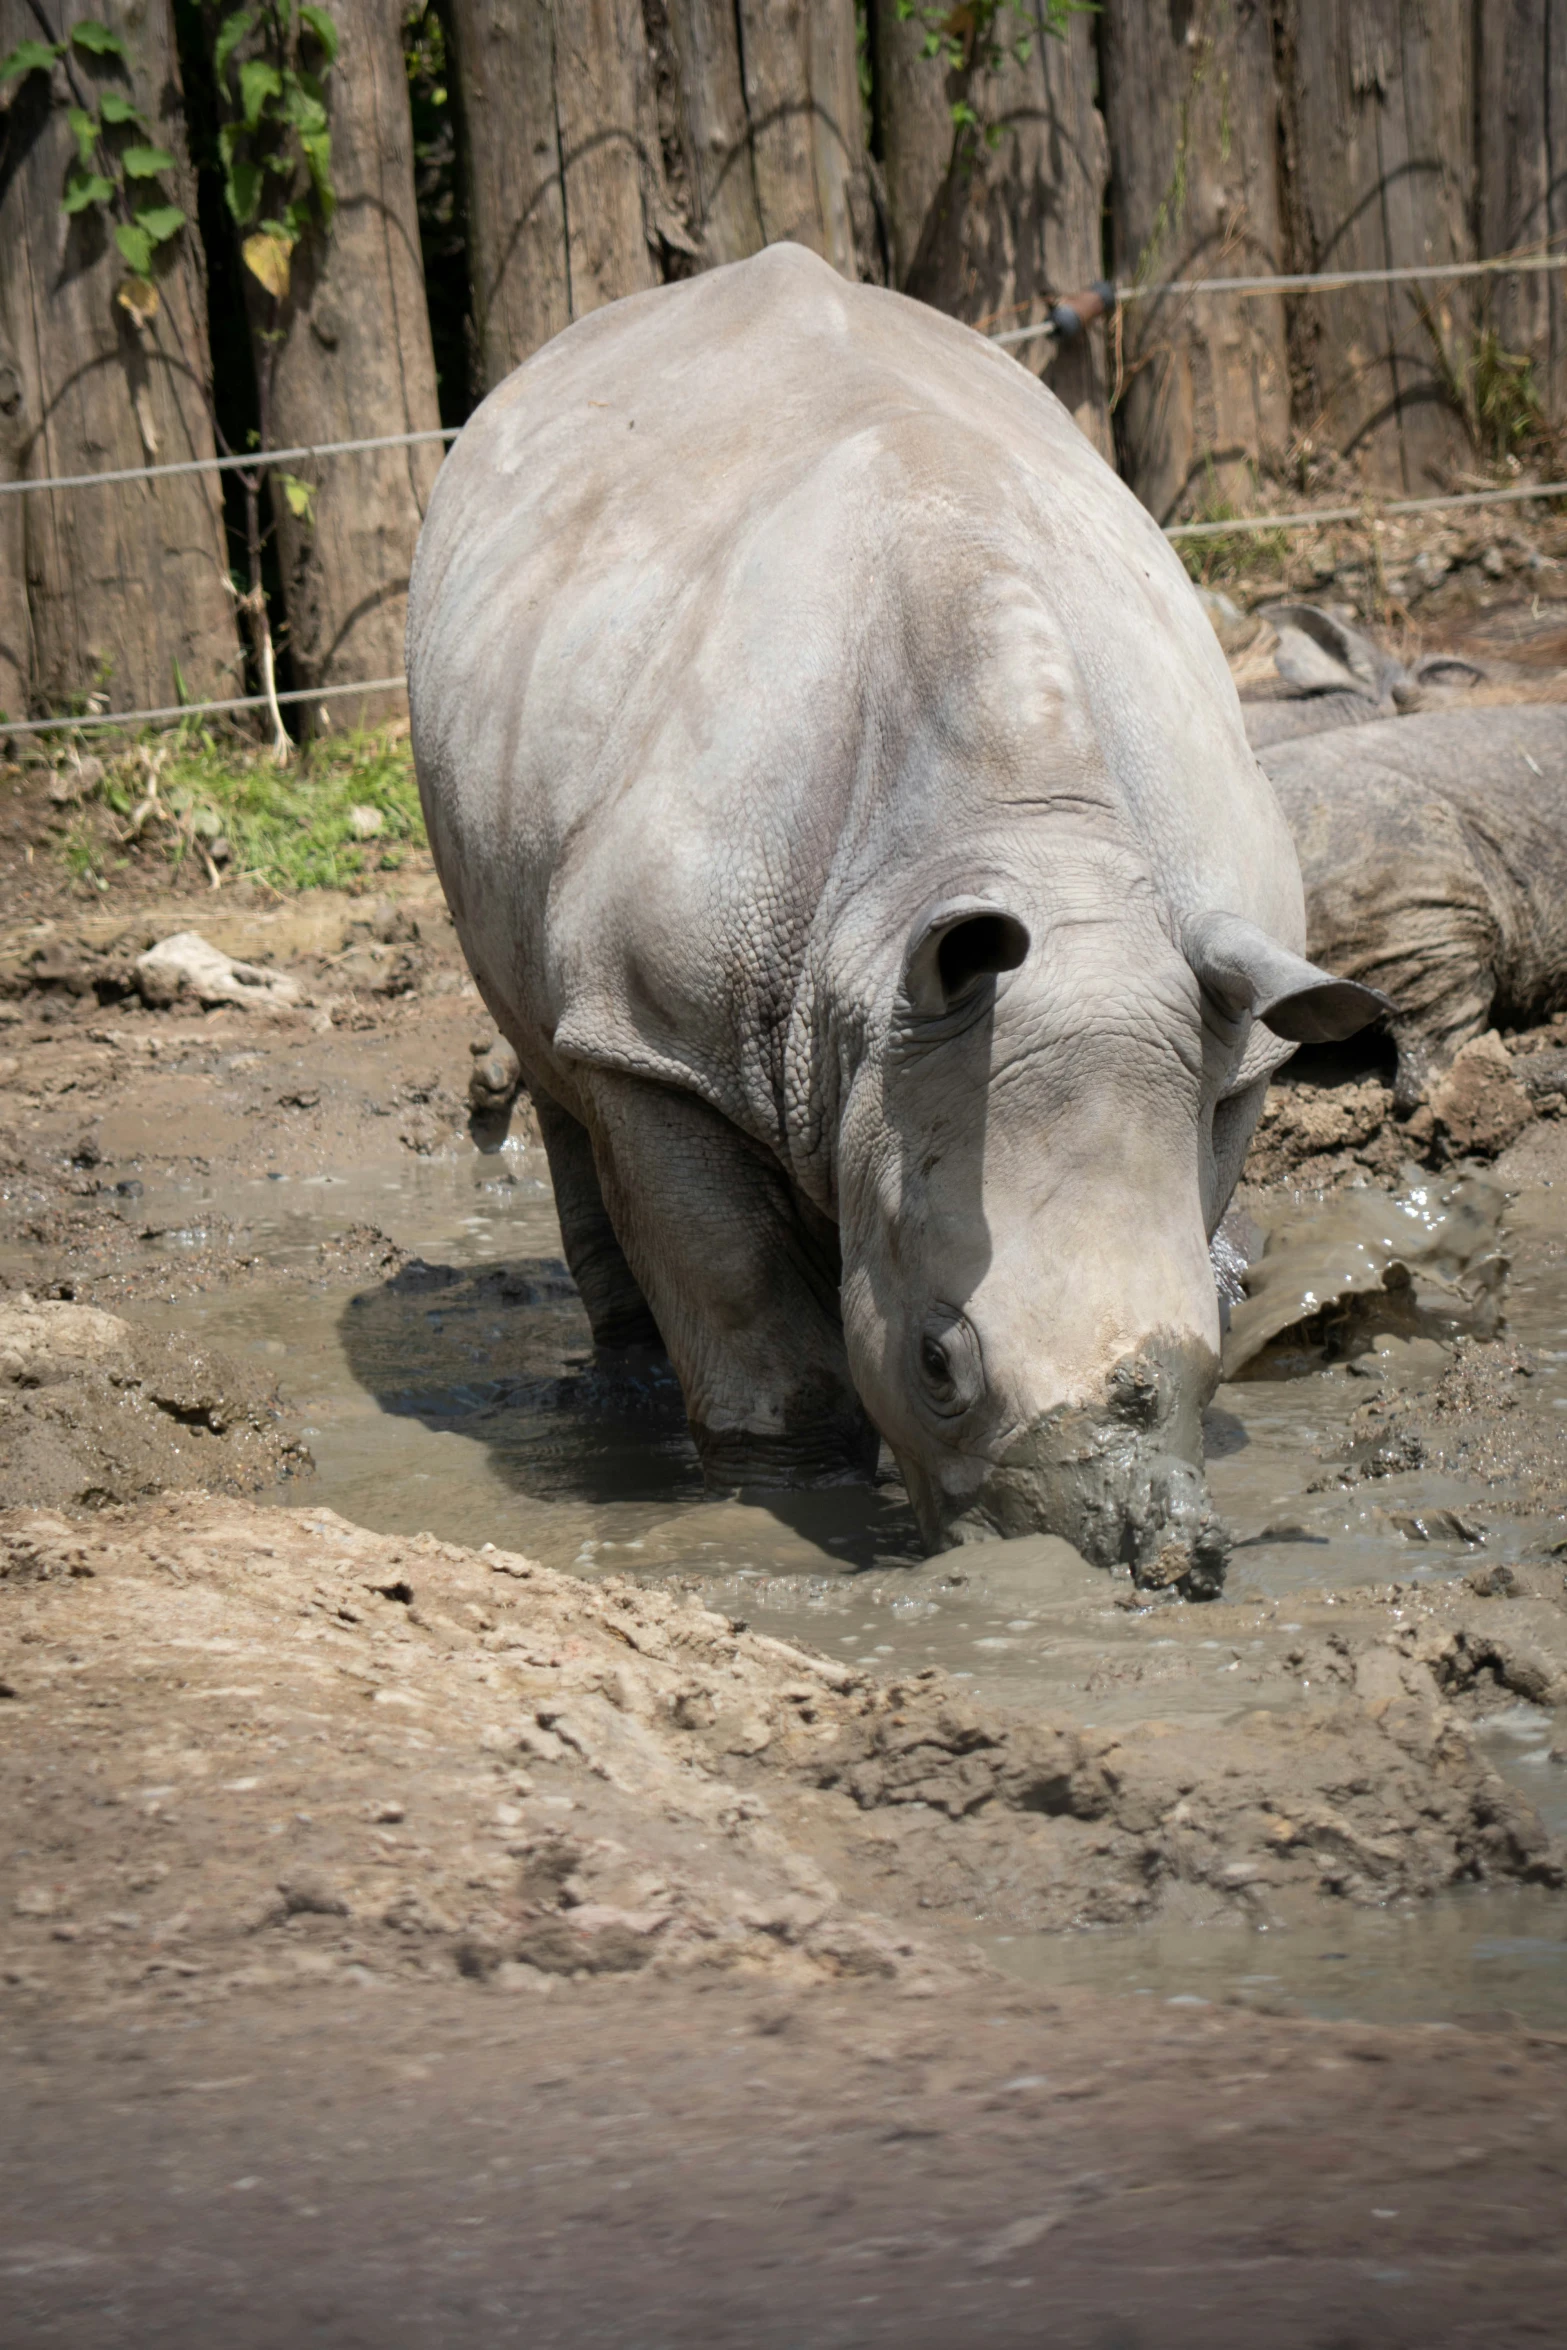 the rhino is walking in a body of water